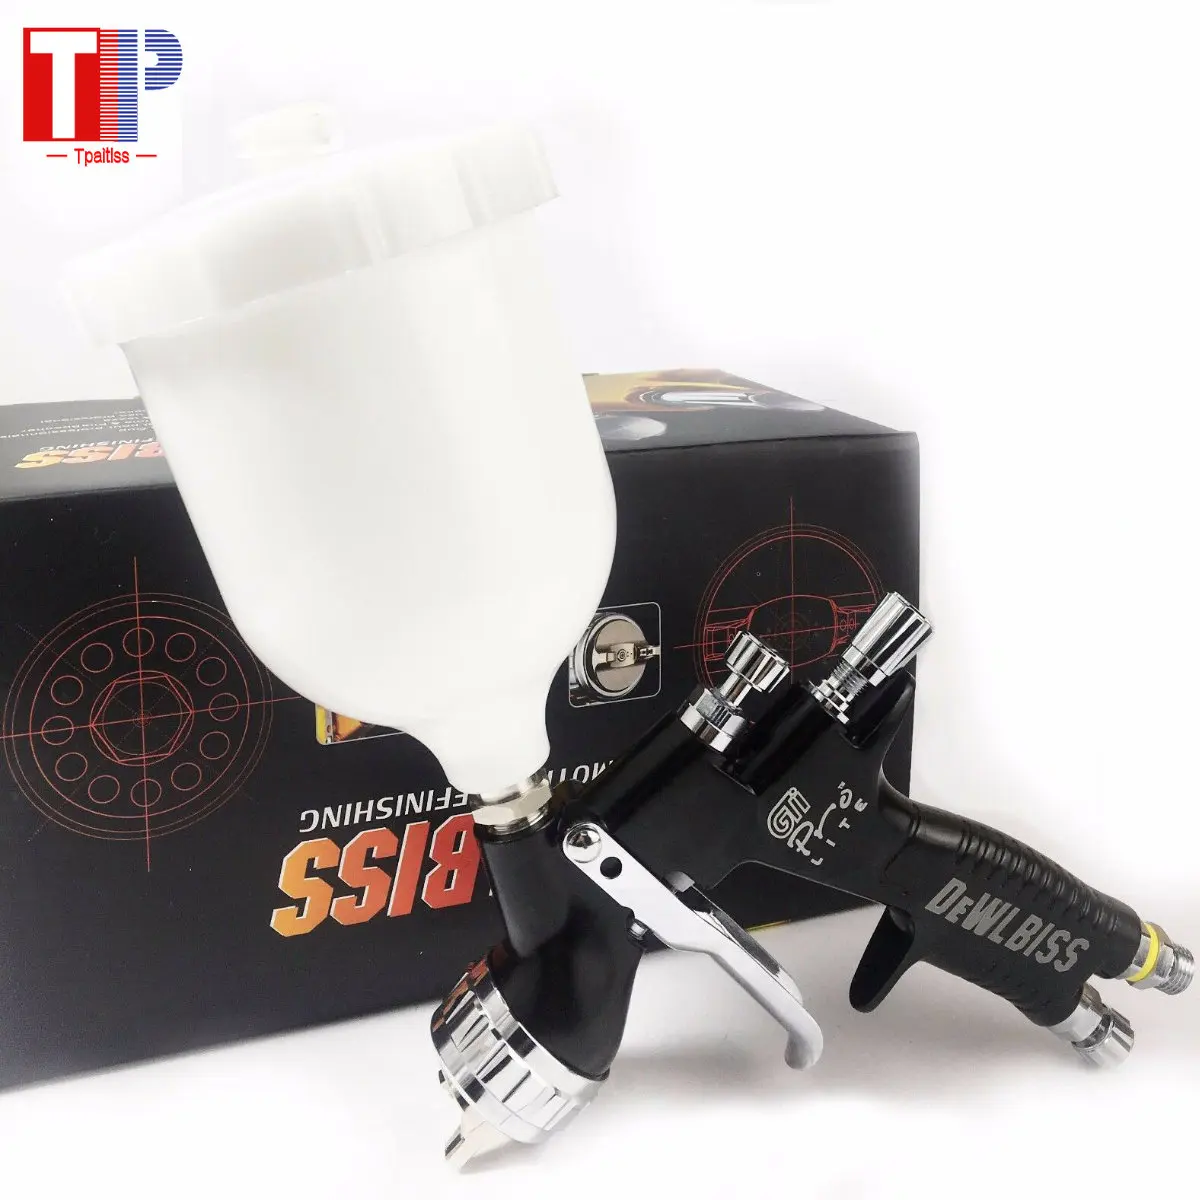 Tpaitlss Spray Gun GTI Pro Painting Gun TE20 1.3mm Nozzle Black With Mixing Cup Water Based Air Spray Gun Airbrush